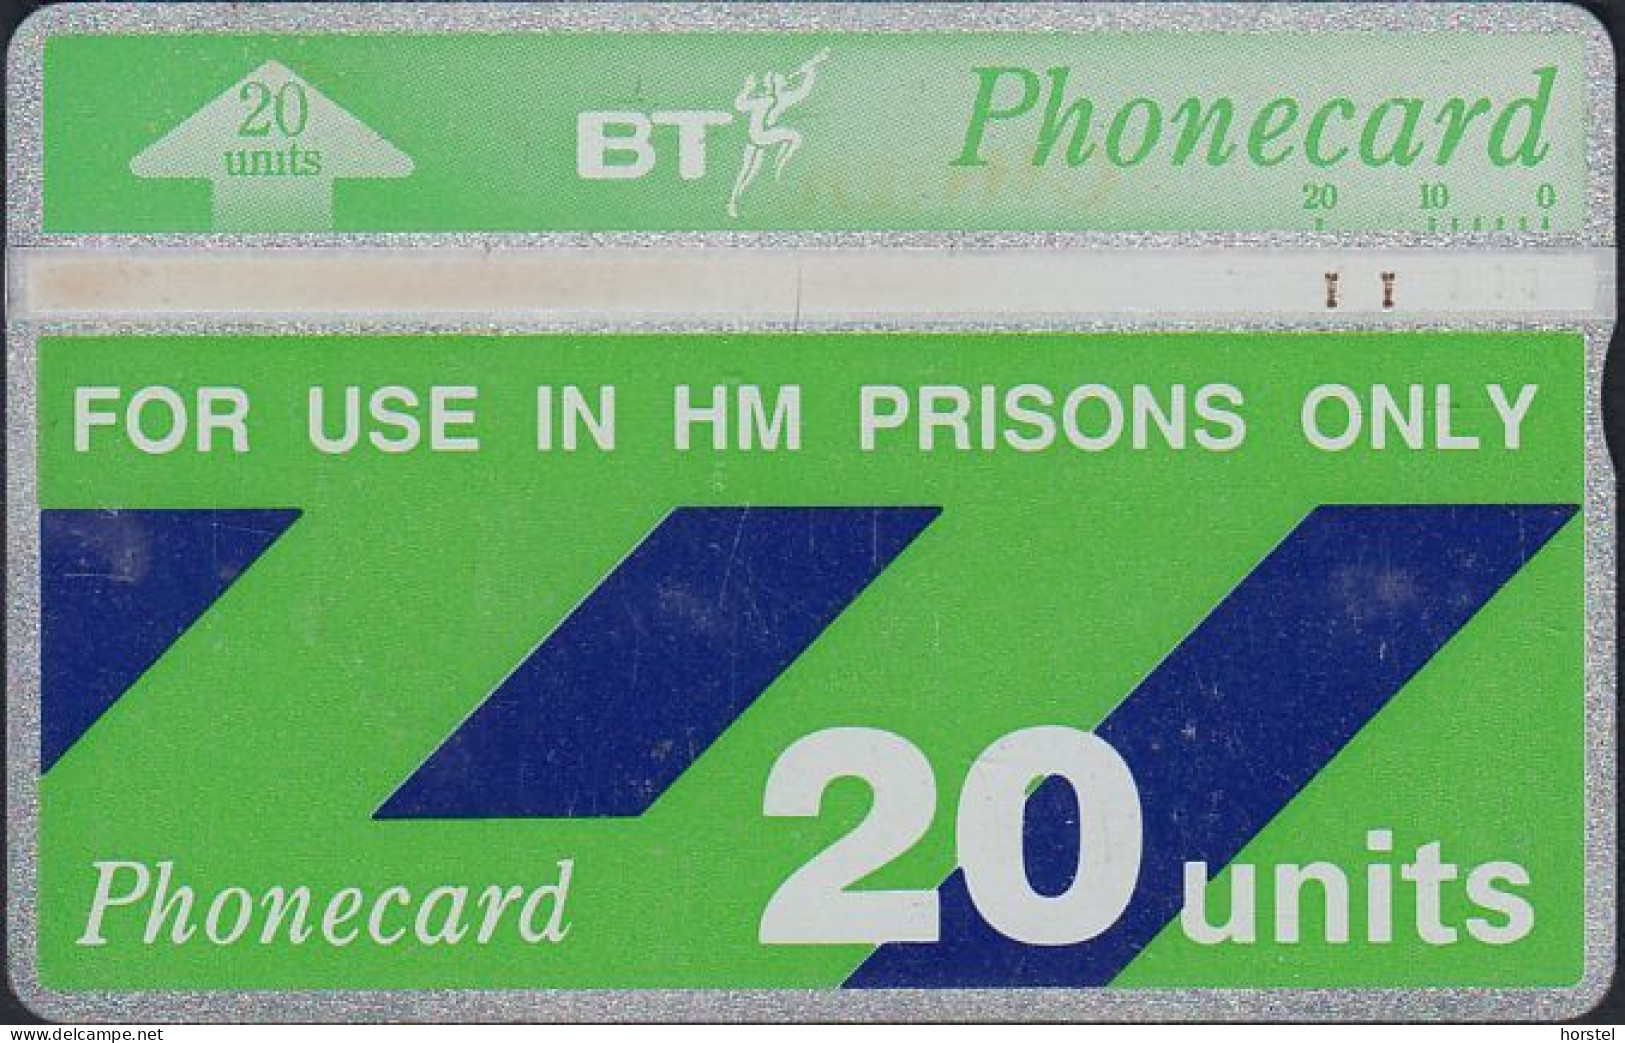 UK - British Telecom L&G H.M. Prison Card CUP005  (212E)  20 Units - [ 3] Prisons